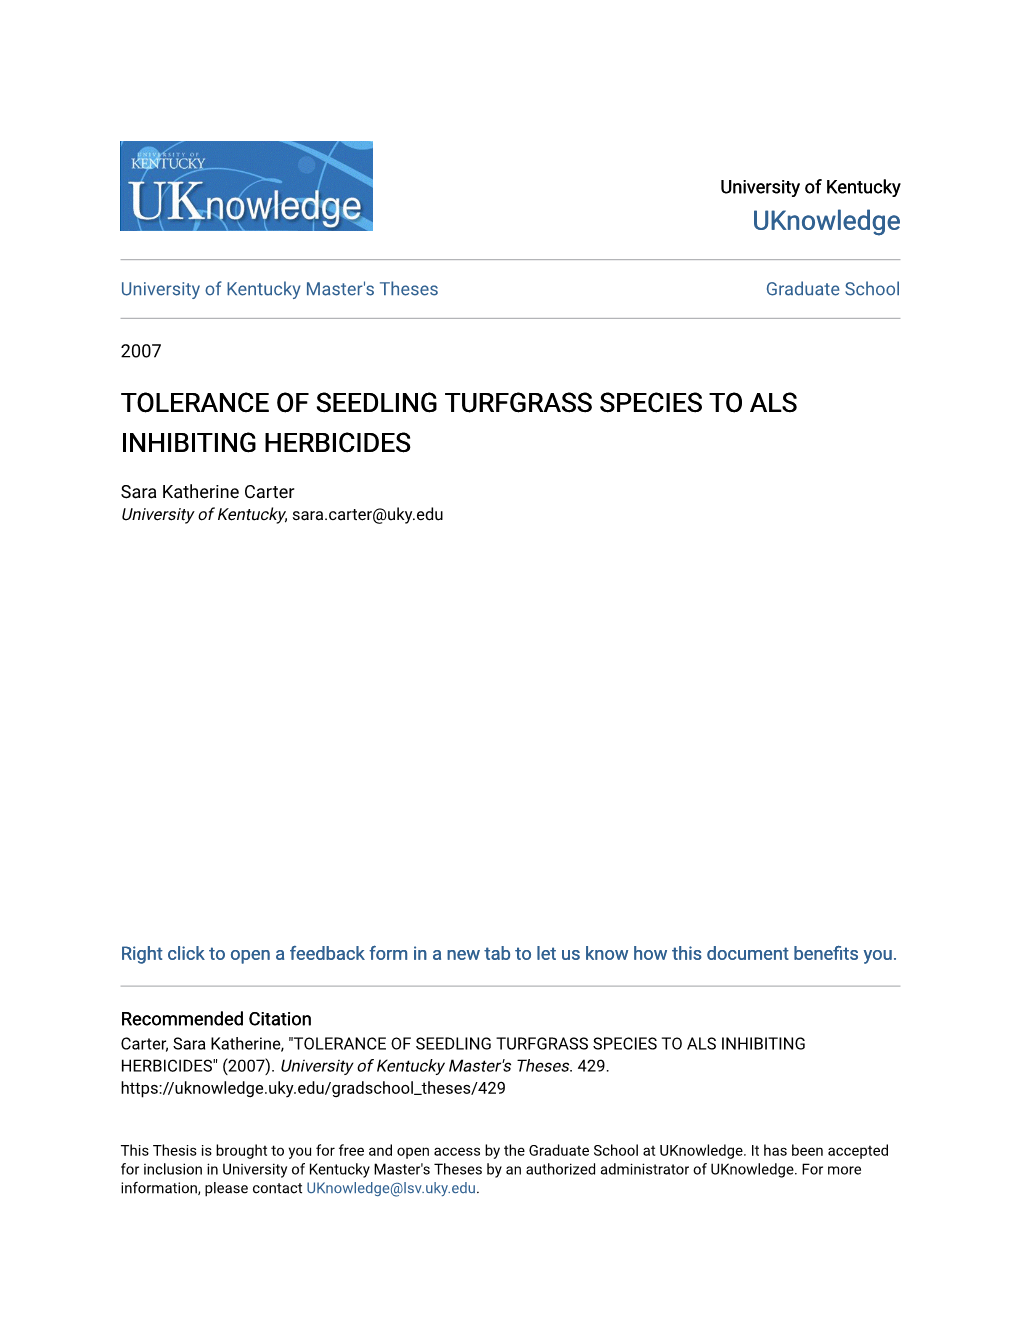 Tolerance of Seedling Turfgrass Species to Als Inhibiting Herbicides